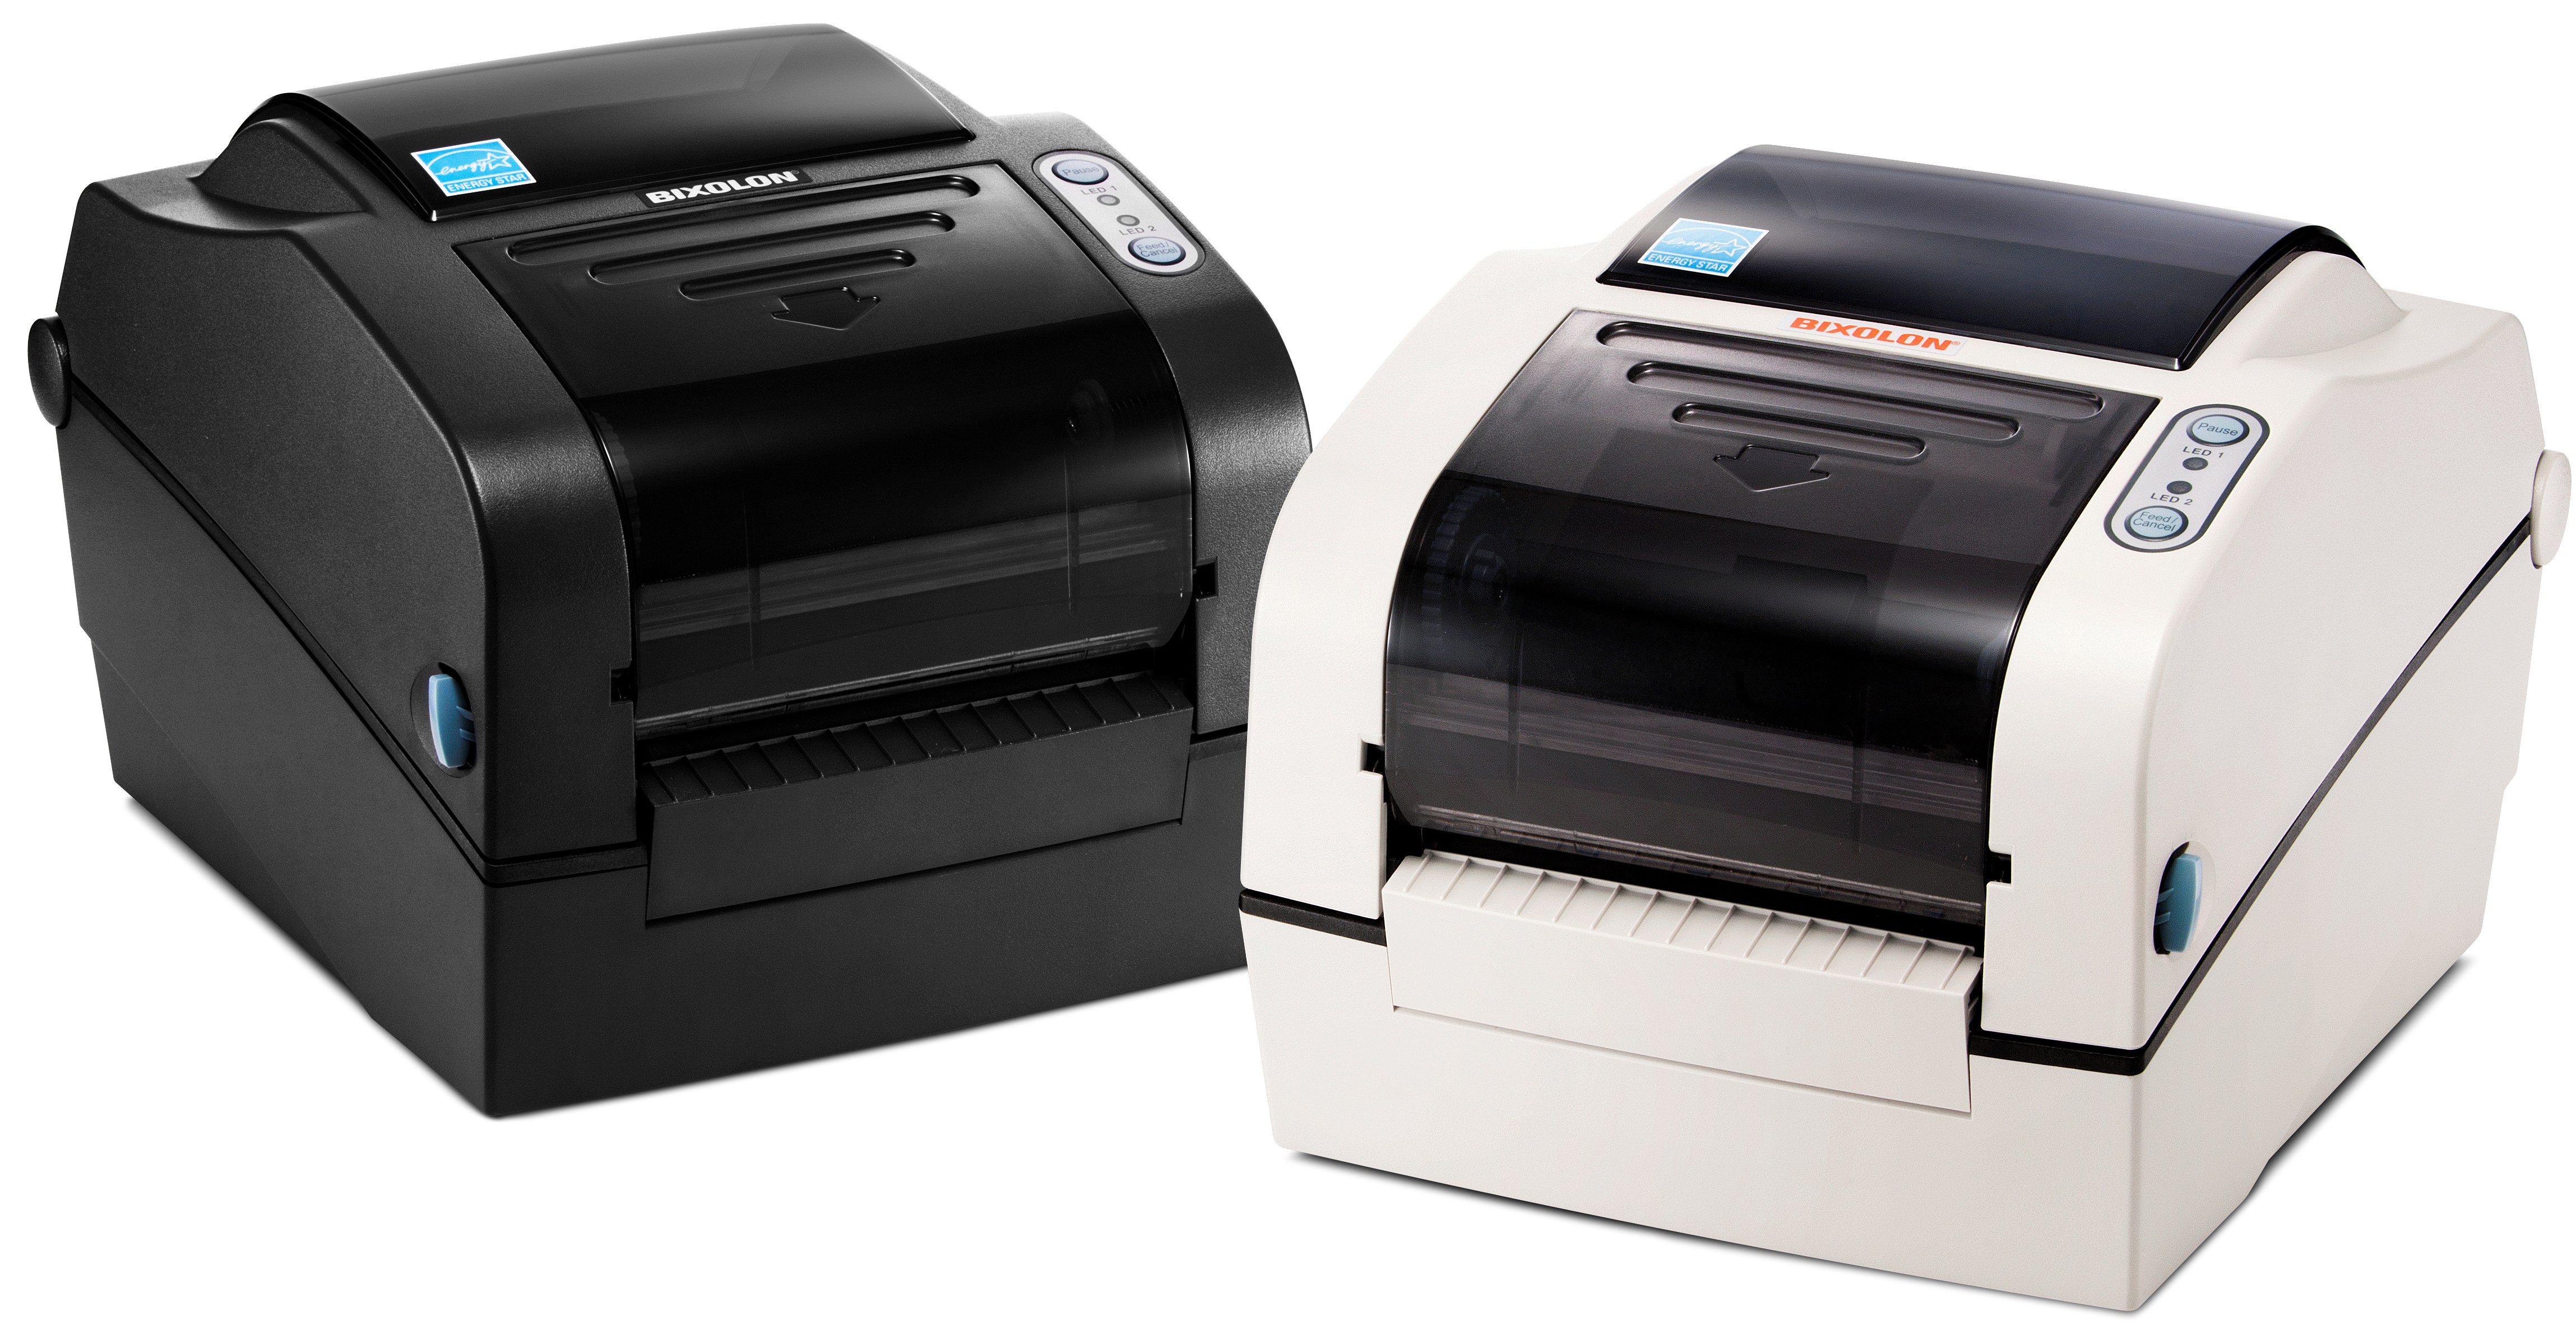 BIXOLON Launches Compact Thermal Transfer Desktop Label Printer The SLP